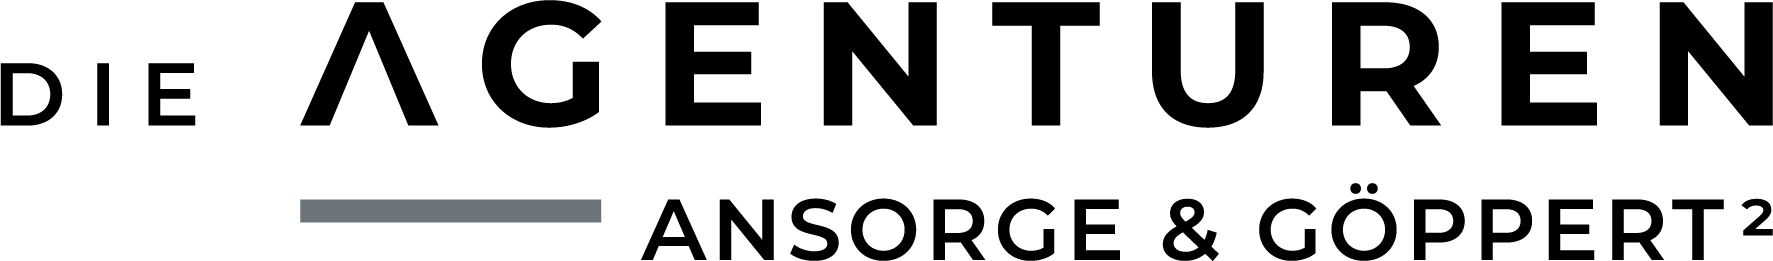 Agentur Ansorge Logo